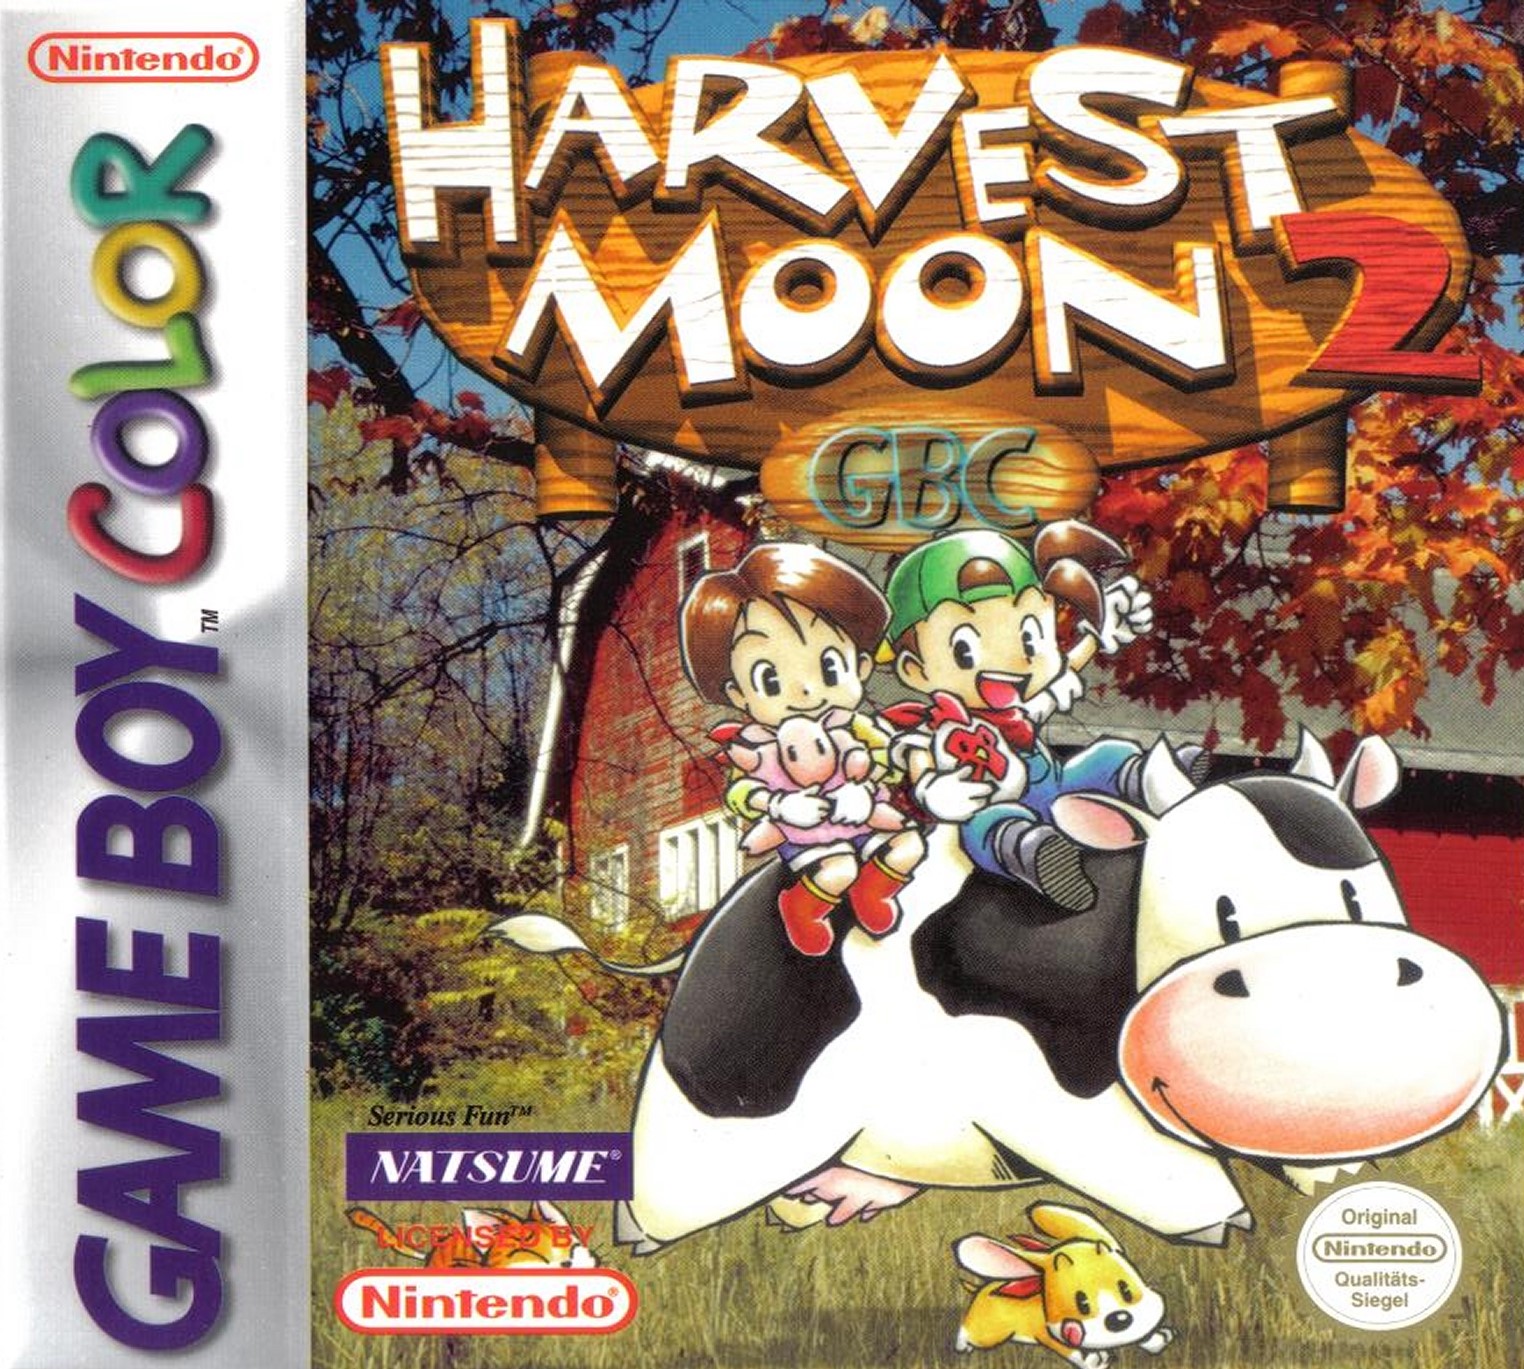 'Harvest Moon 2 GBC'